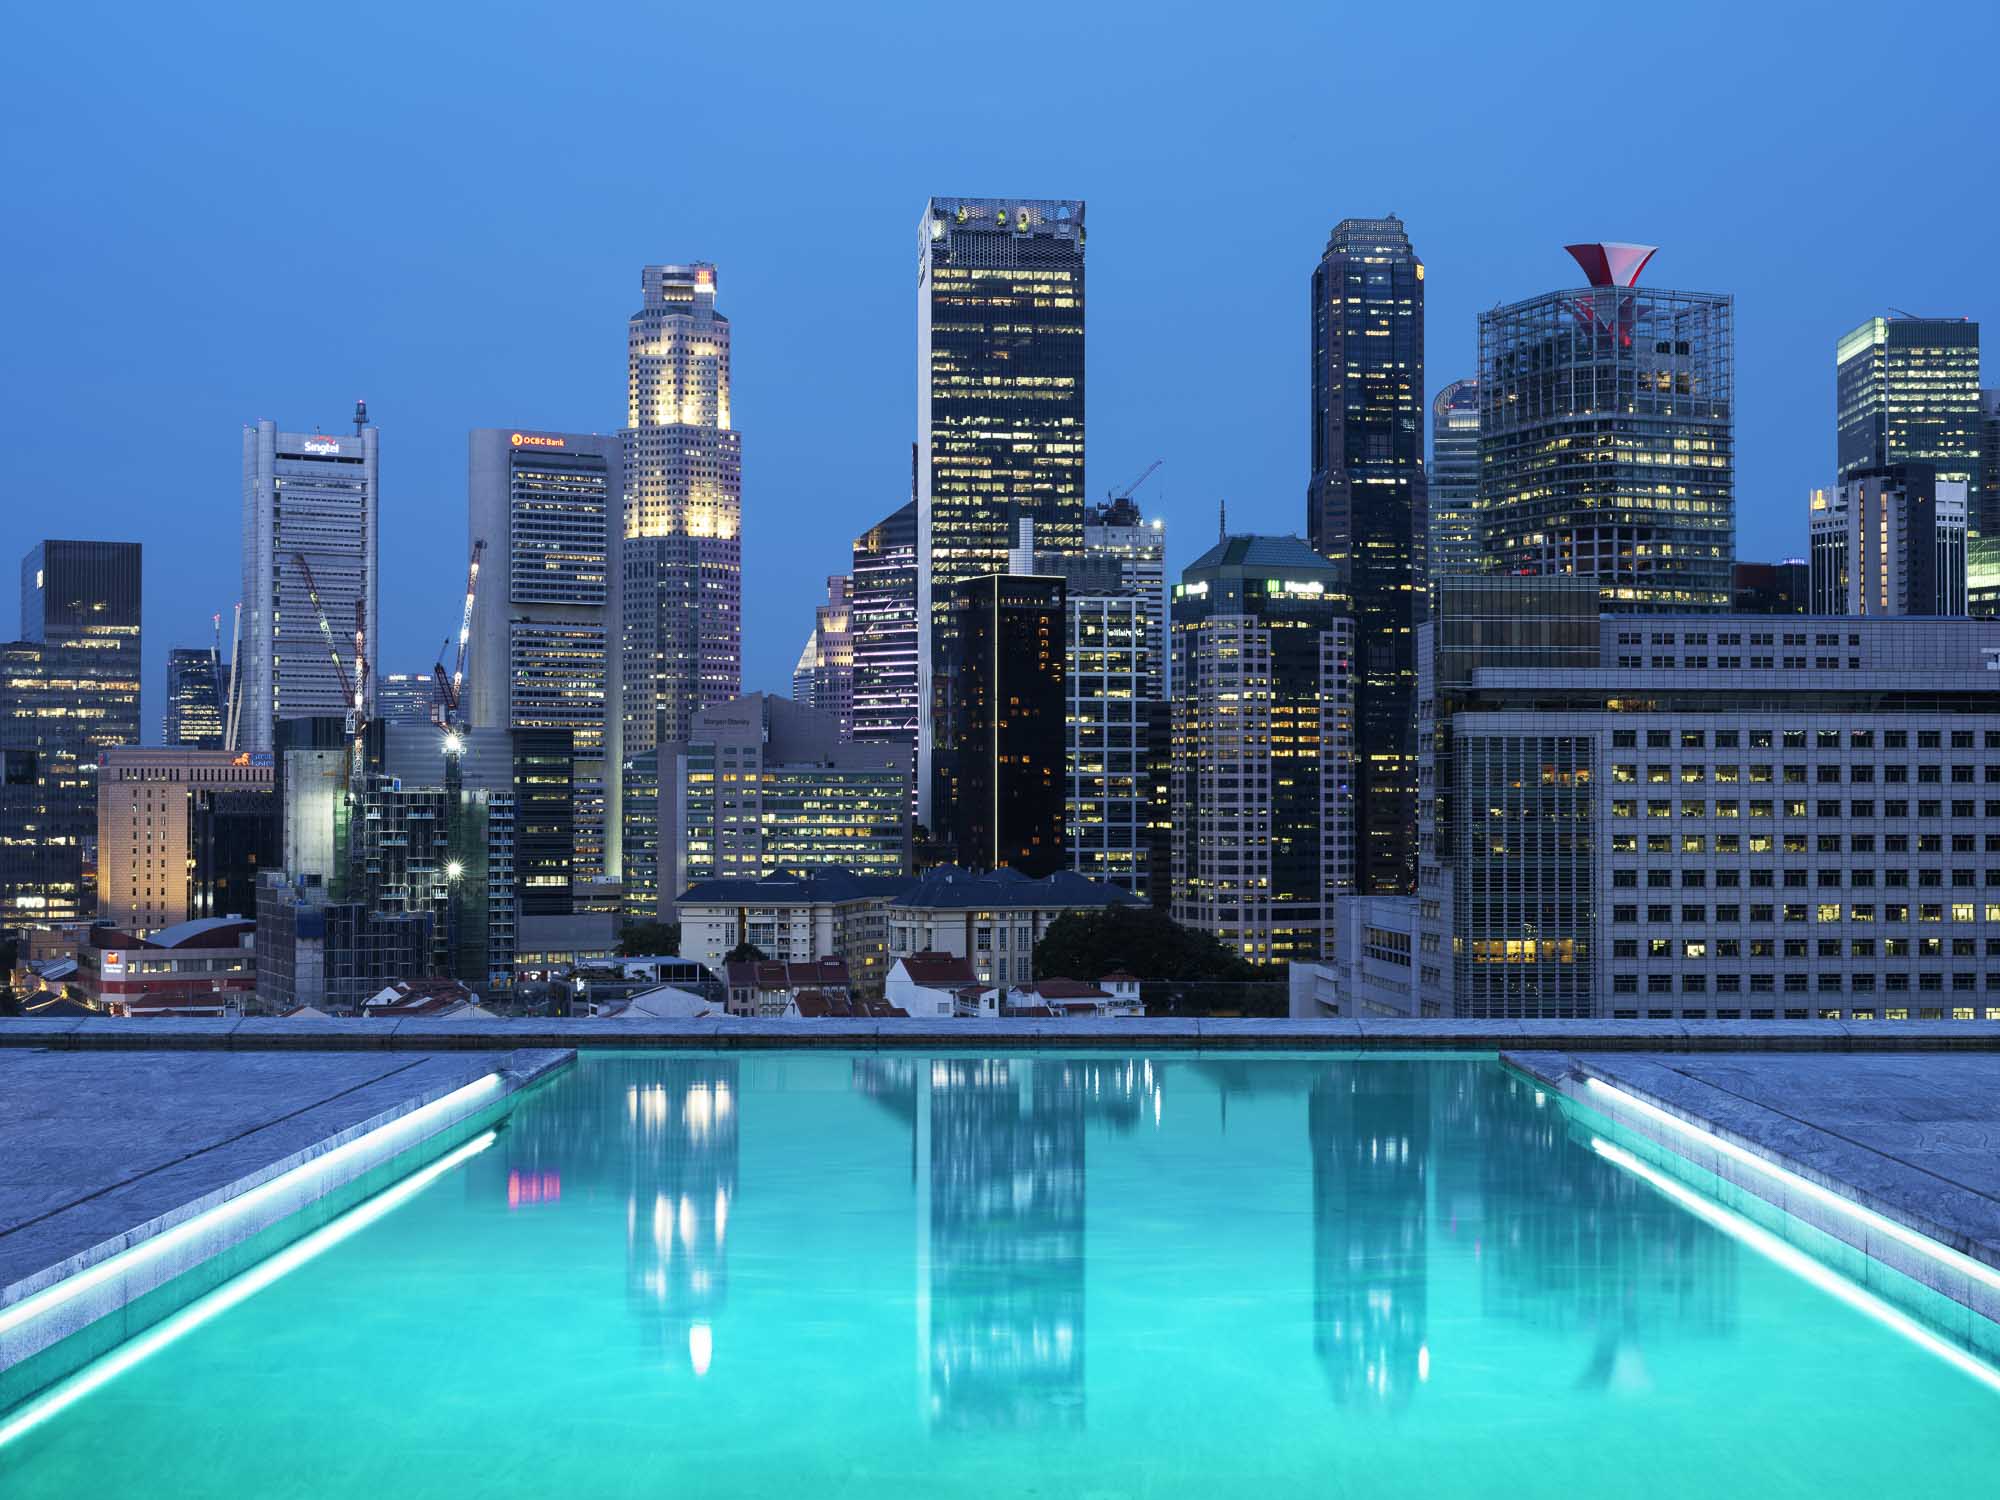 Mondrian hotel swimming pool facing the buildings